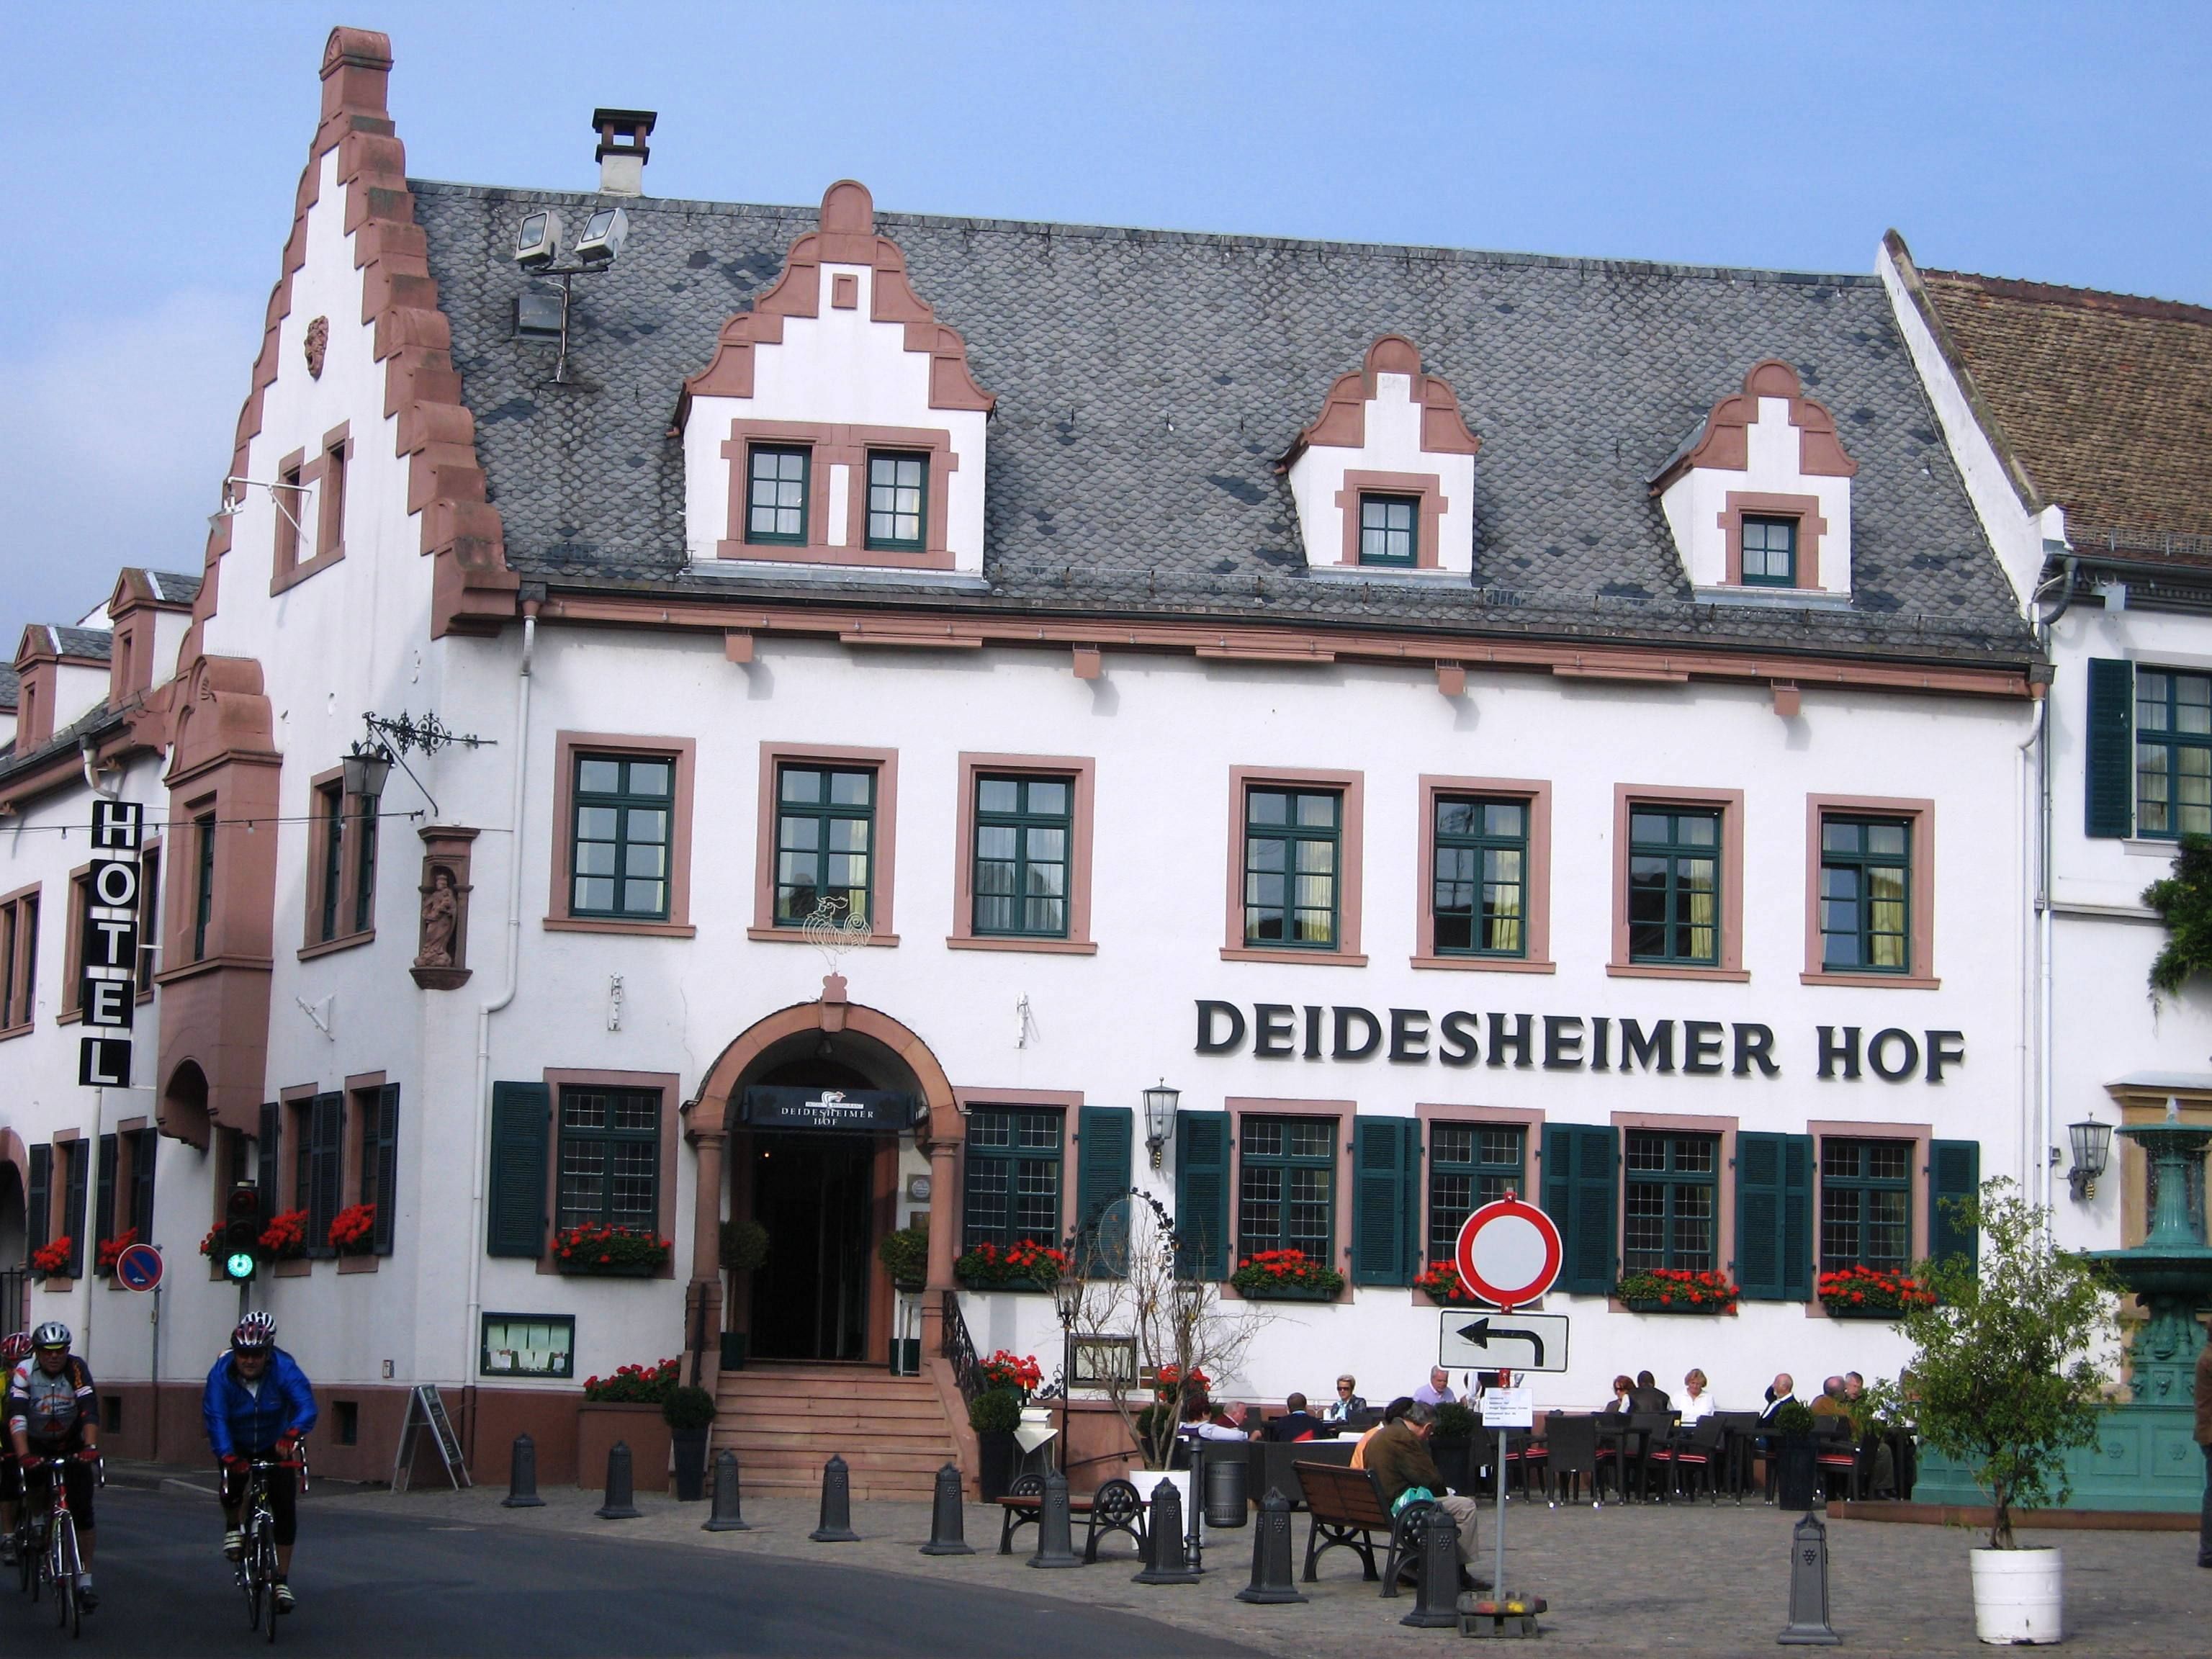 Deidesheim